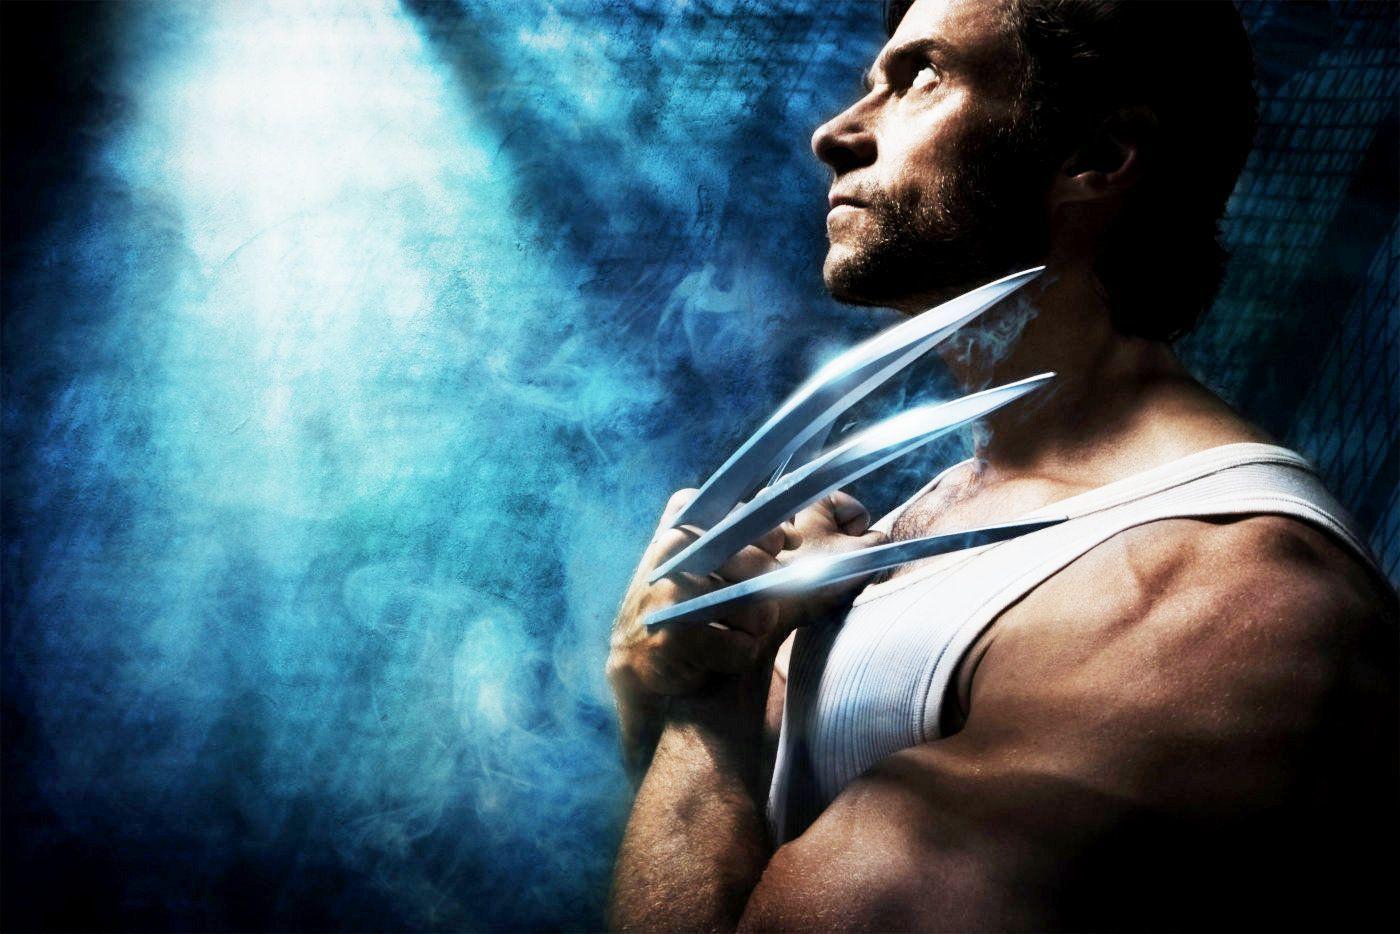 Wallpaper Wolverine X Men